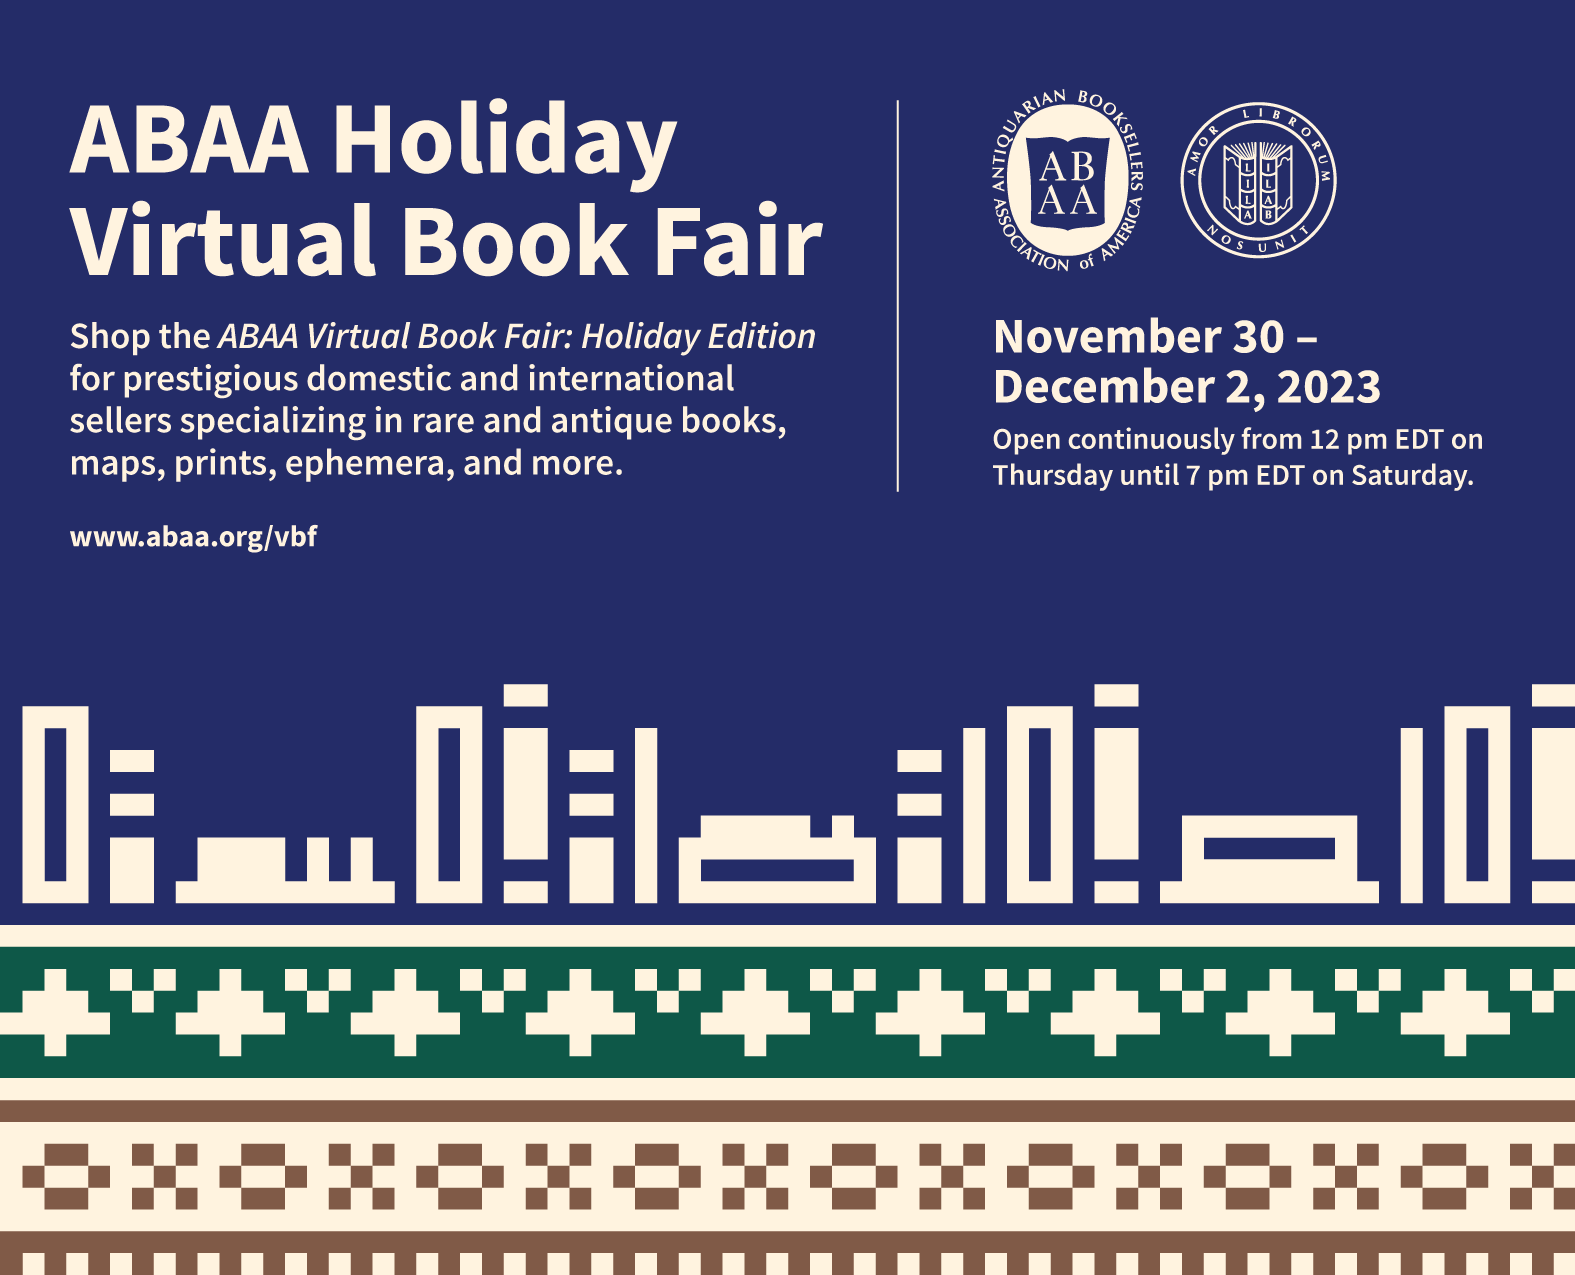 ABAA Holiday Virtual Book Fair